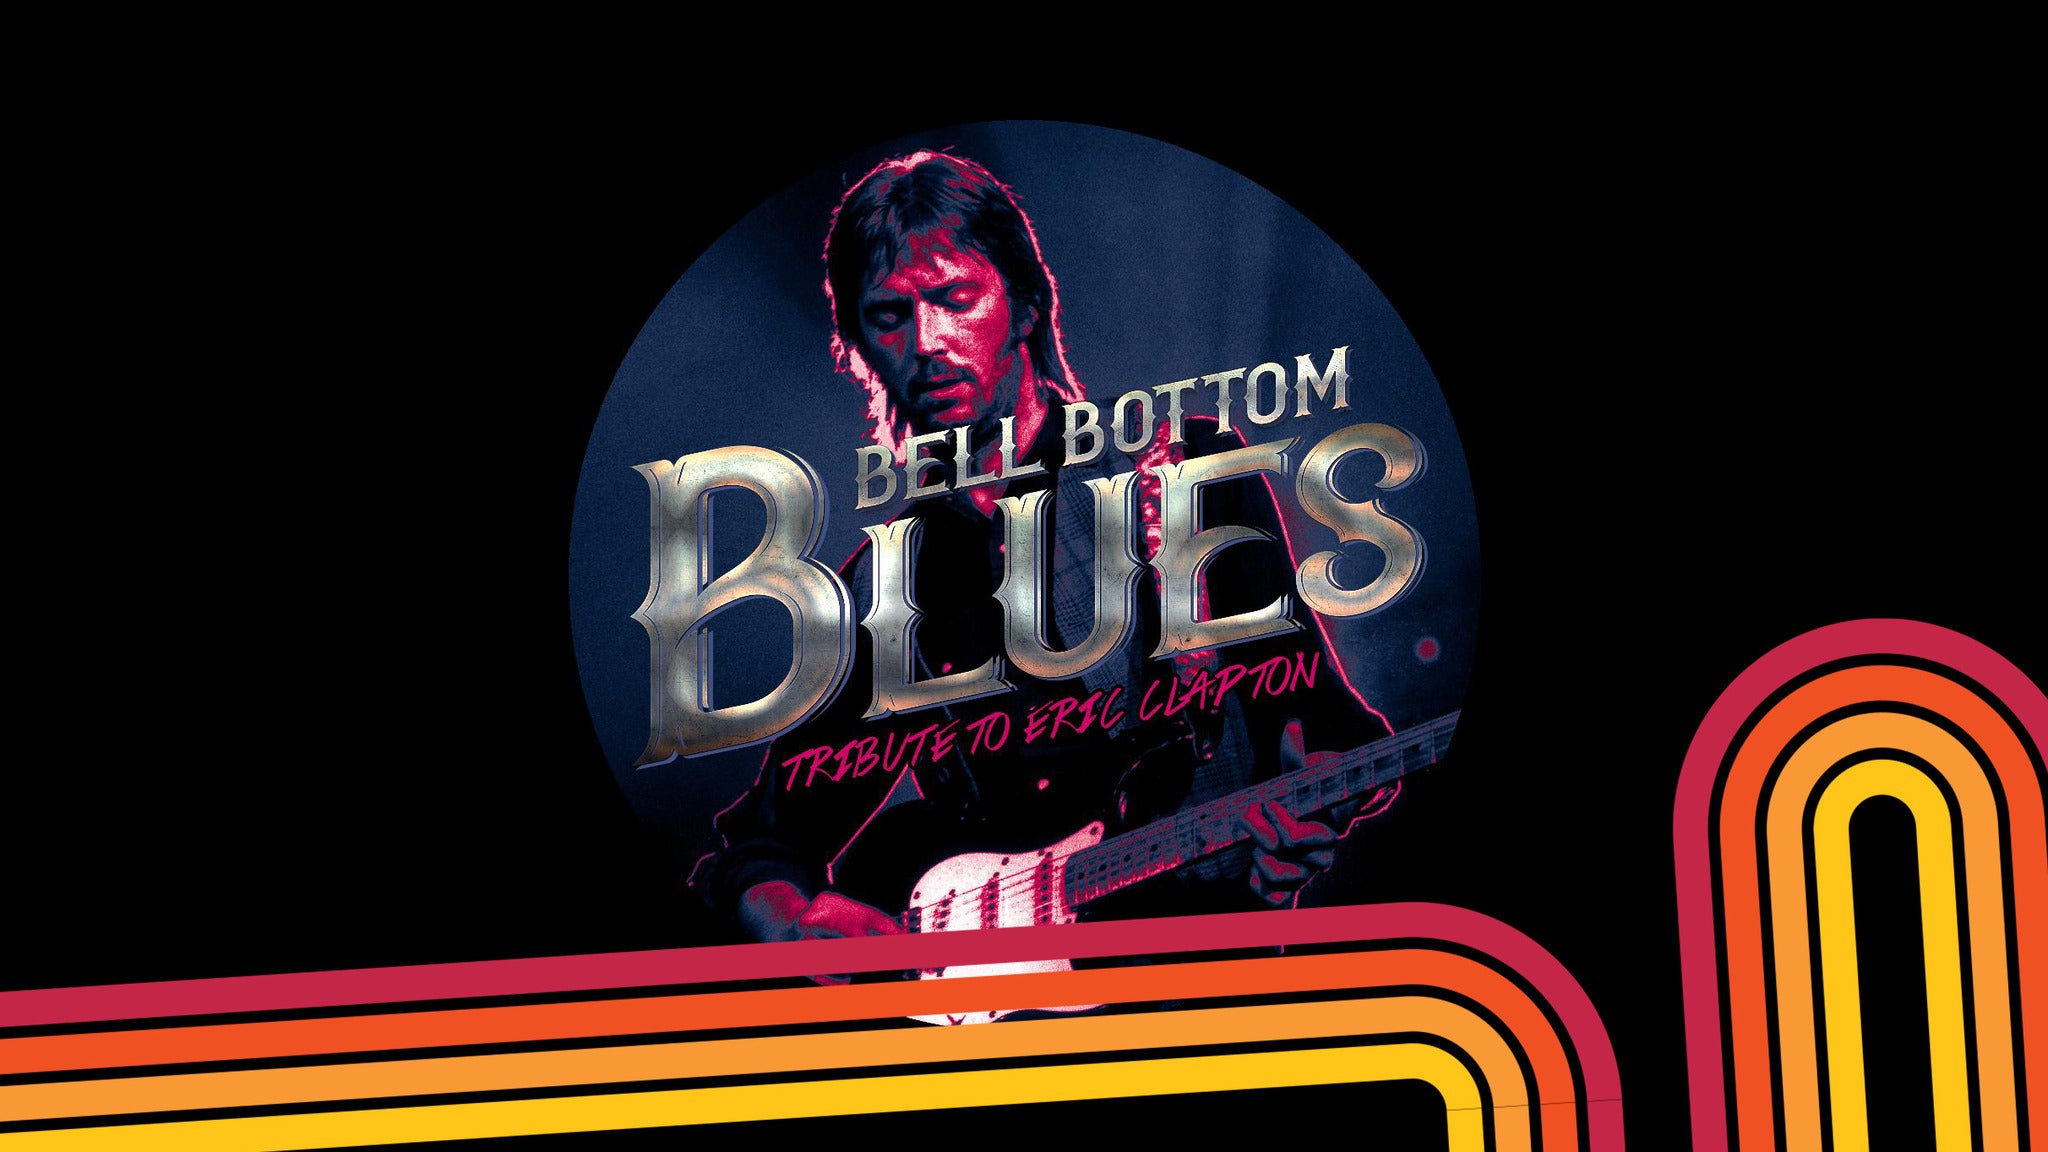 Bell Bottom Blues in Red Bank promo photo for Member presale offer code